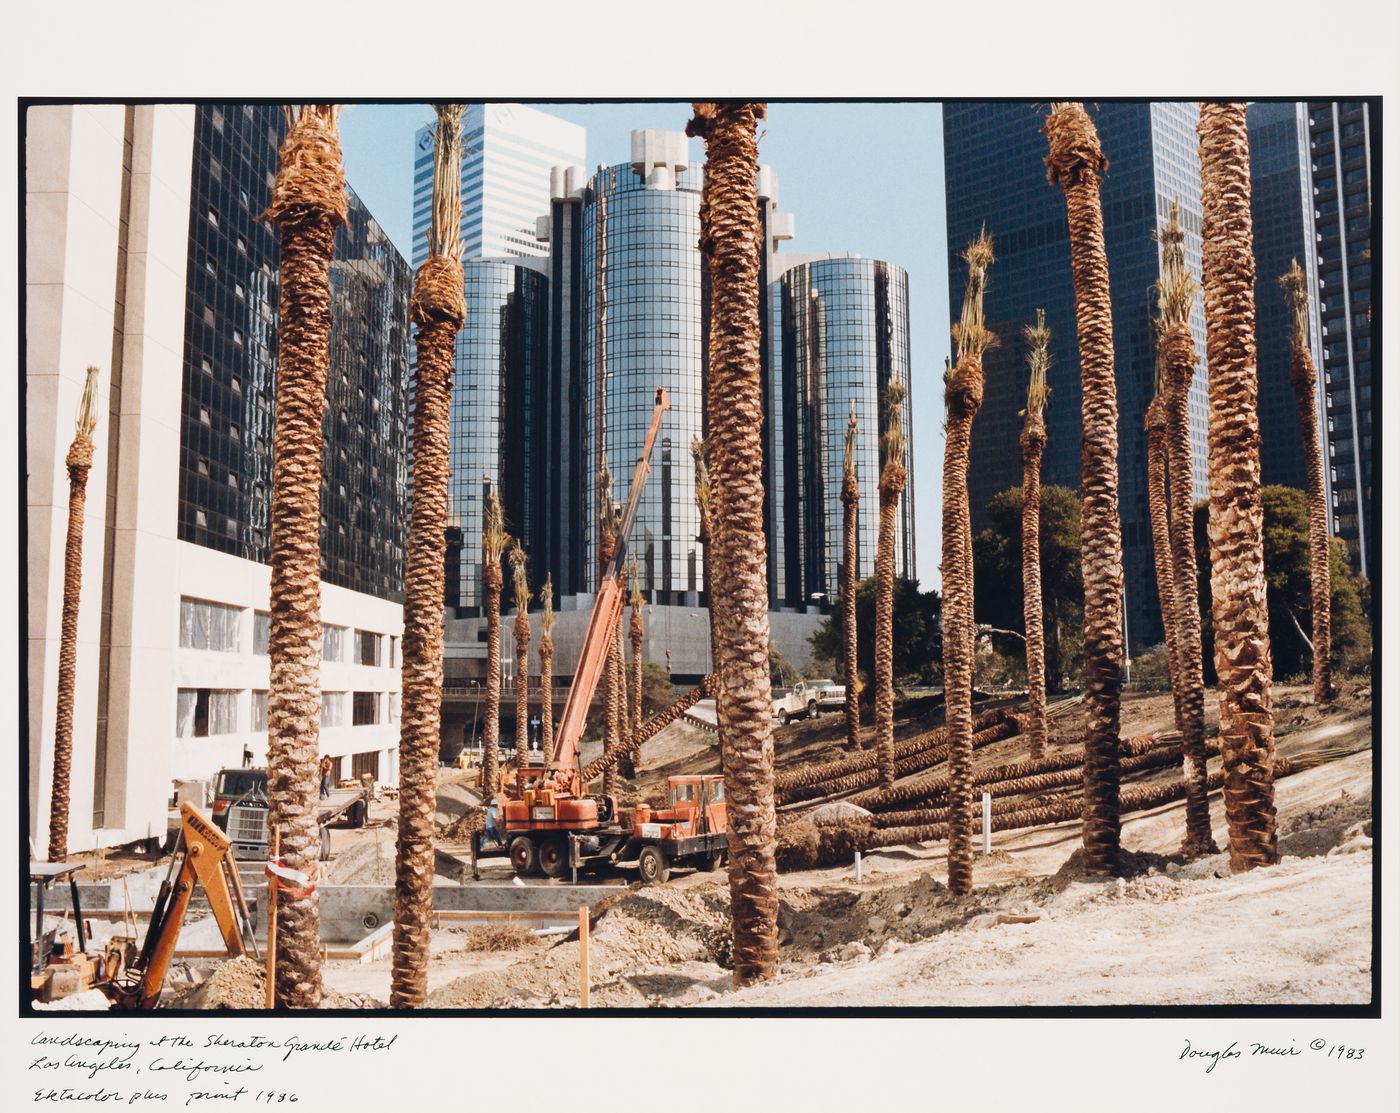 Sheraton Grande Hotel, landscaping palm trees, Los Angeles, California